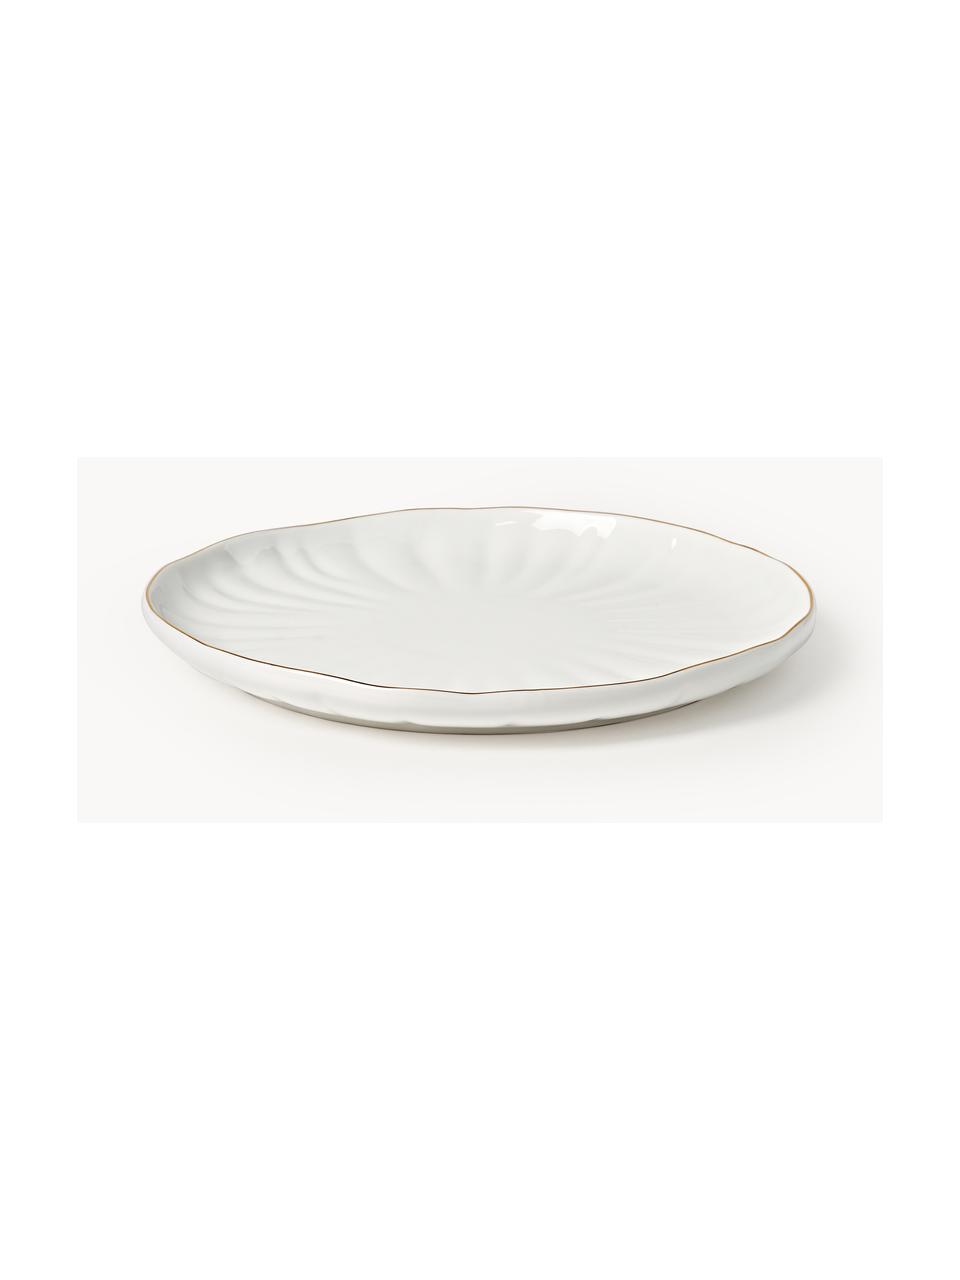 Ontbijtbord Sali met reliëf, 2 stuks, Porselein, geglazuurd, Wit met goudkleurige rand, Ø 21 cm